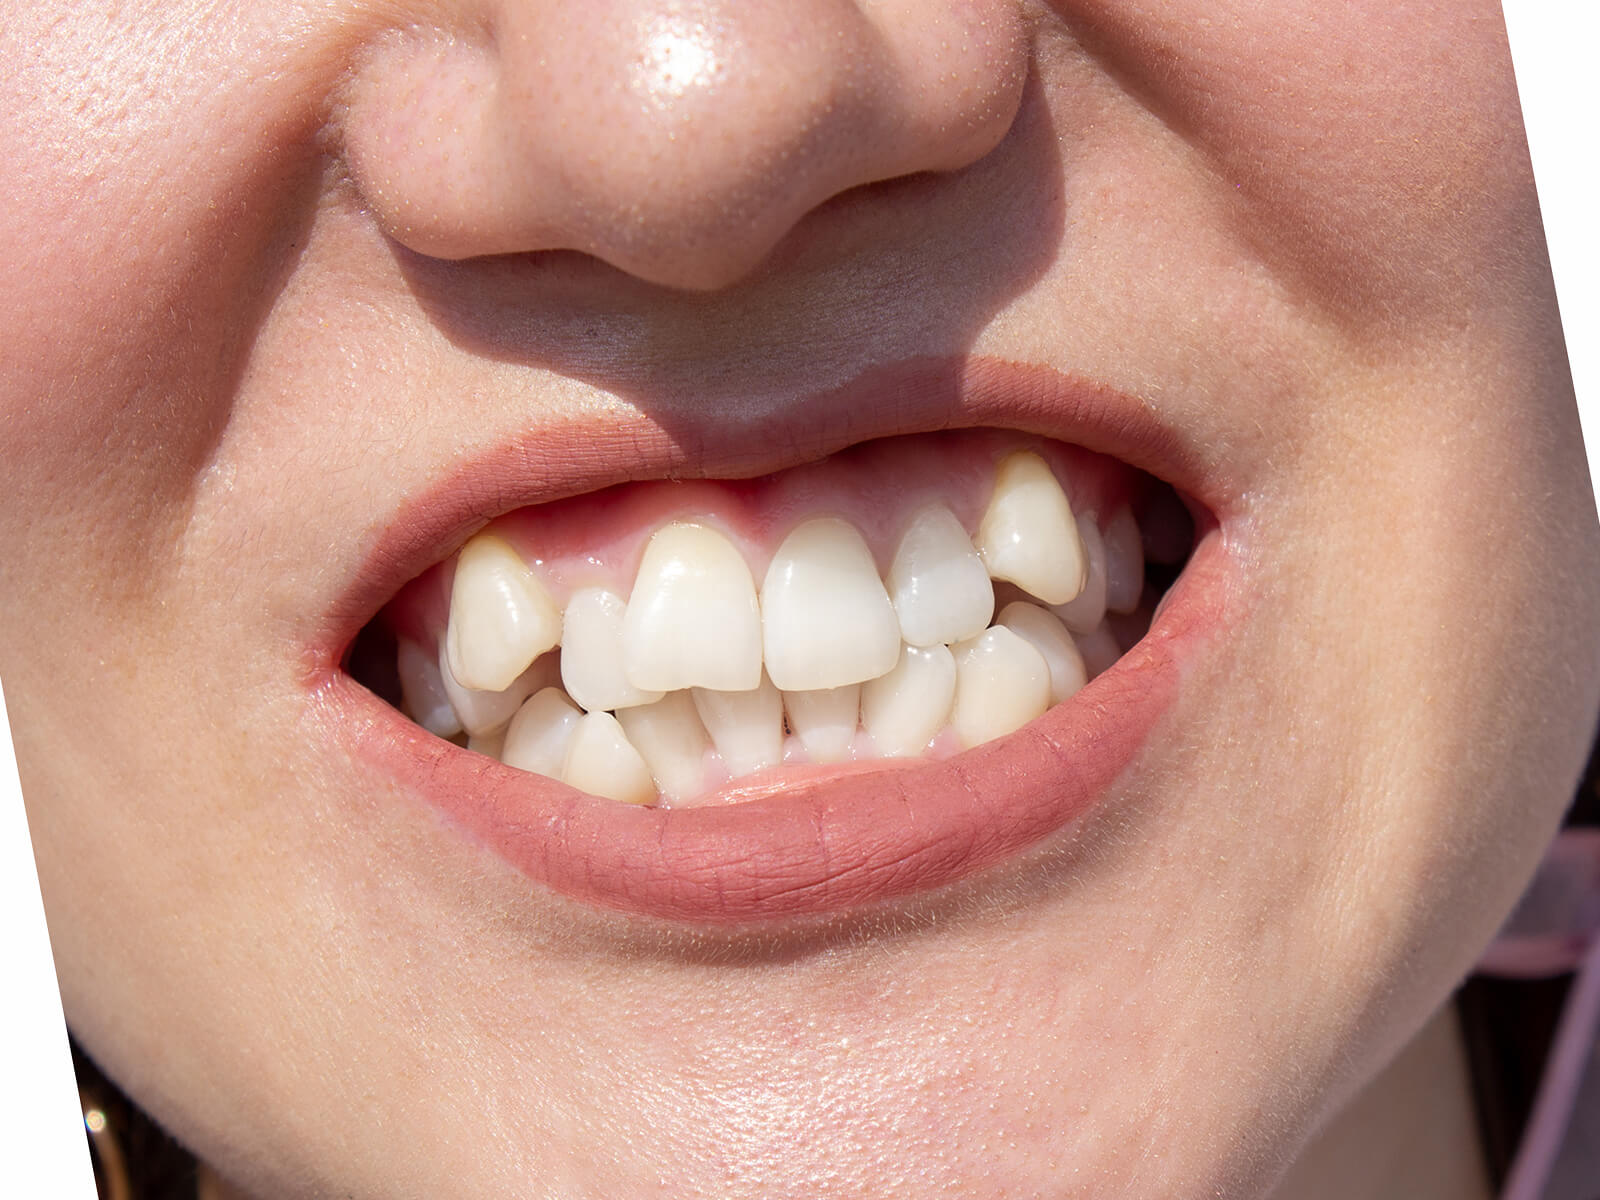 Teeth Shifting: Signs Your Teeth Are Shifting